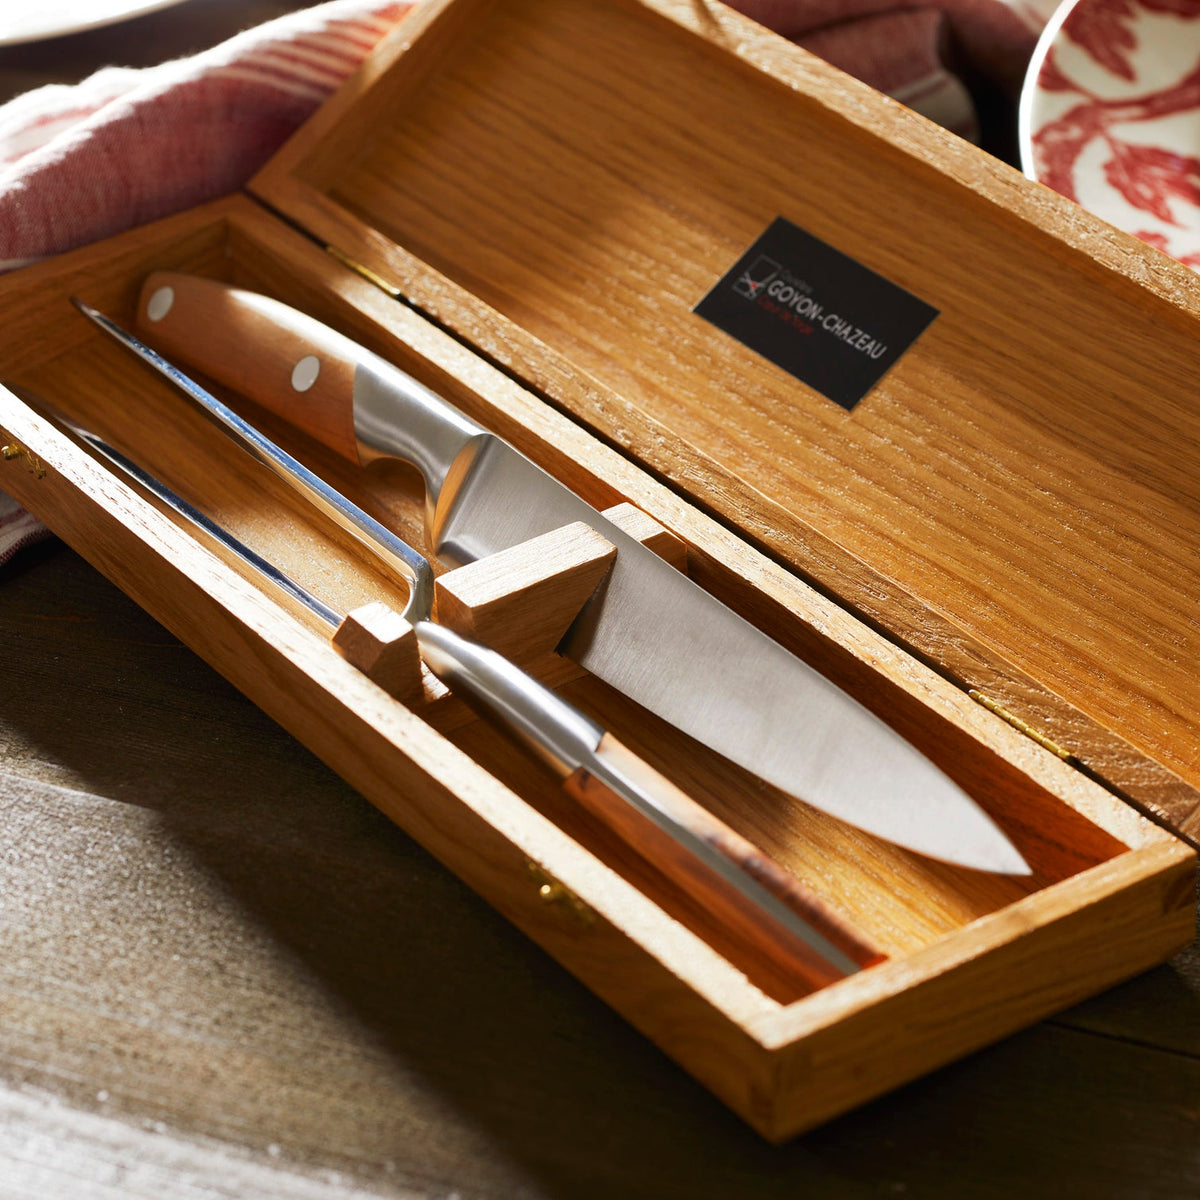 A Goyon-Chazeau Juniper Wood Carving Set knife in a wooden box.